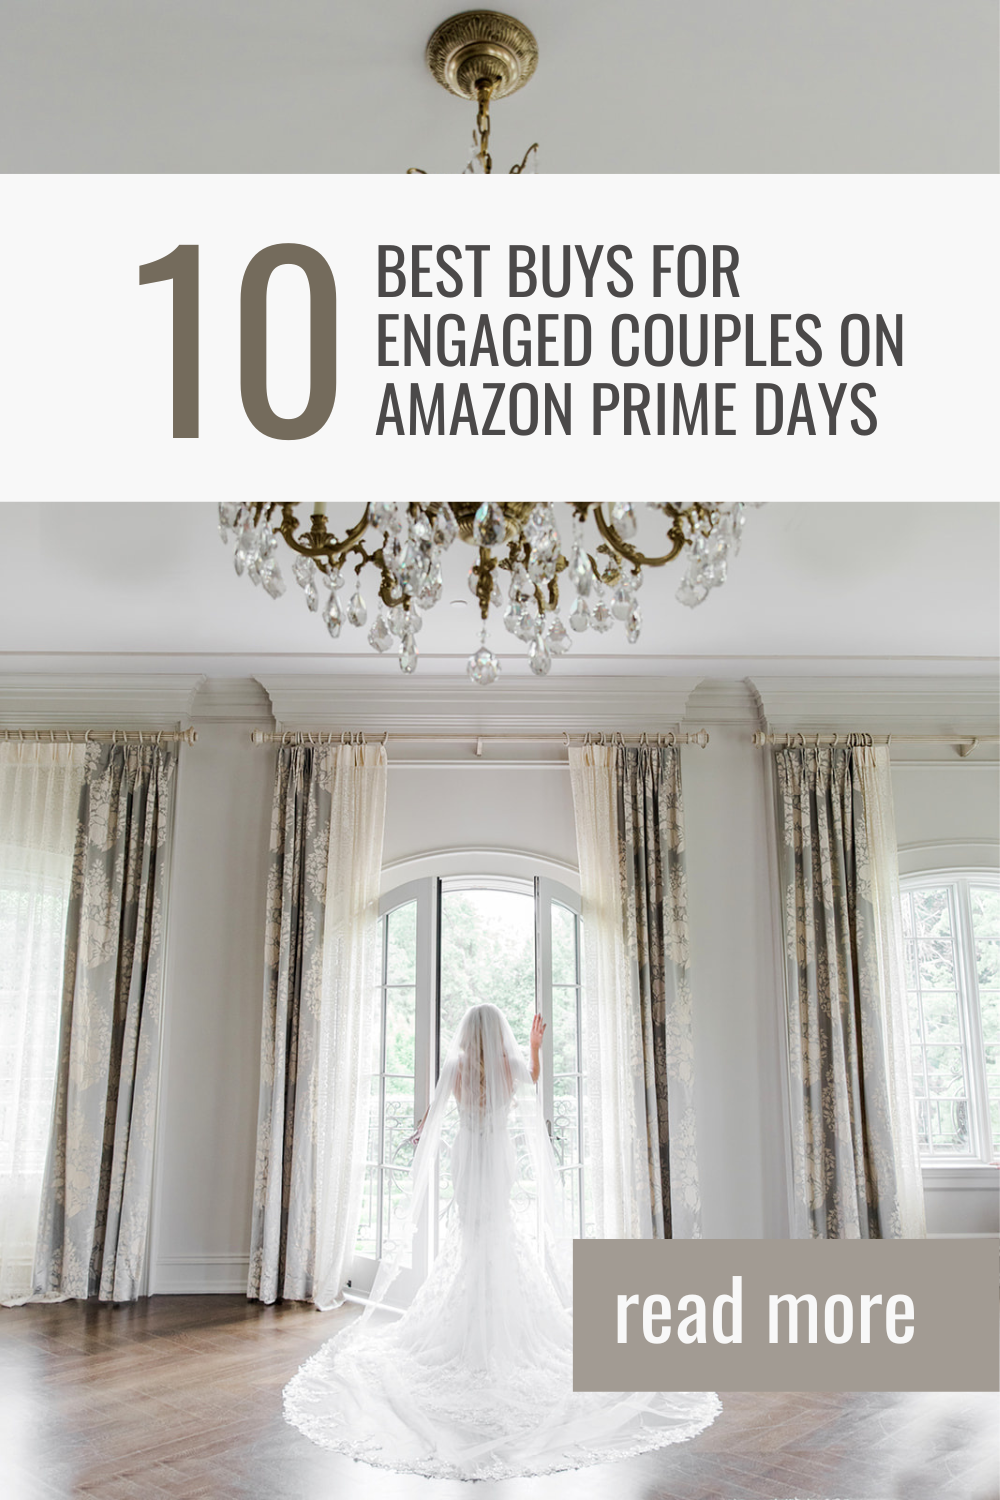 Blog about Amazon Prime Day Deals